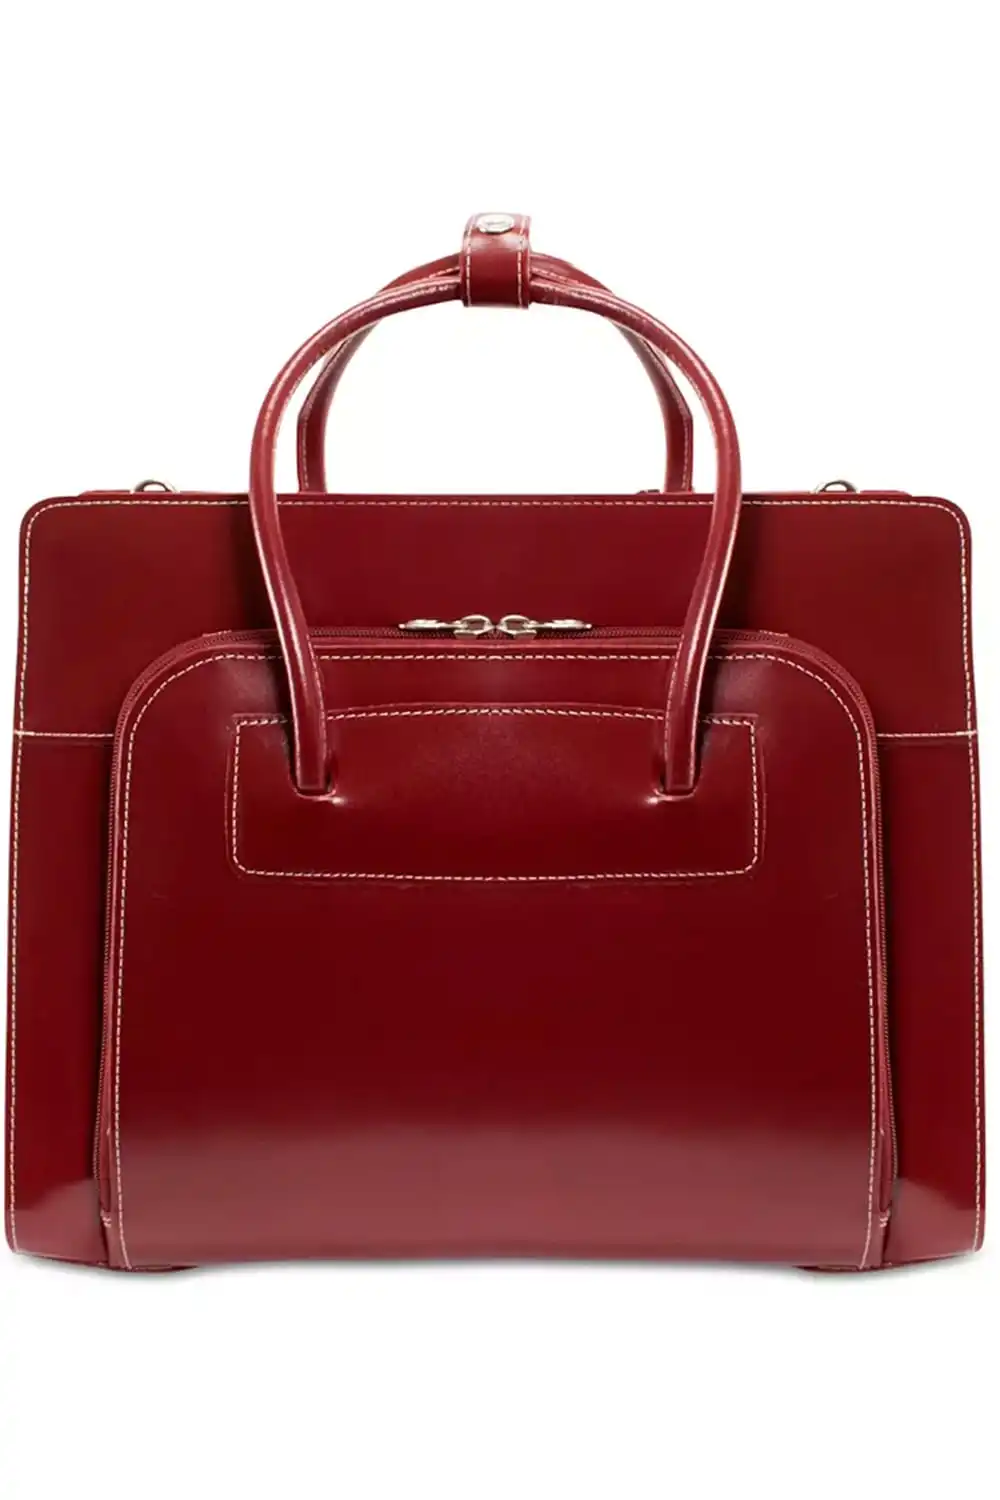 Red workbag for women on white background.